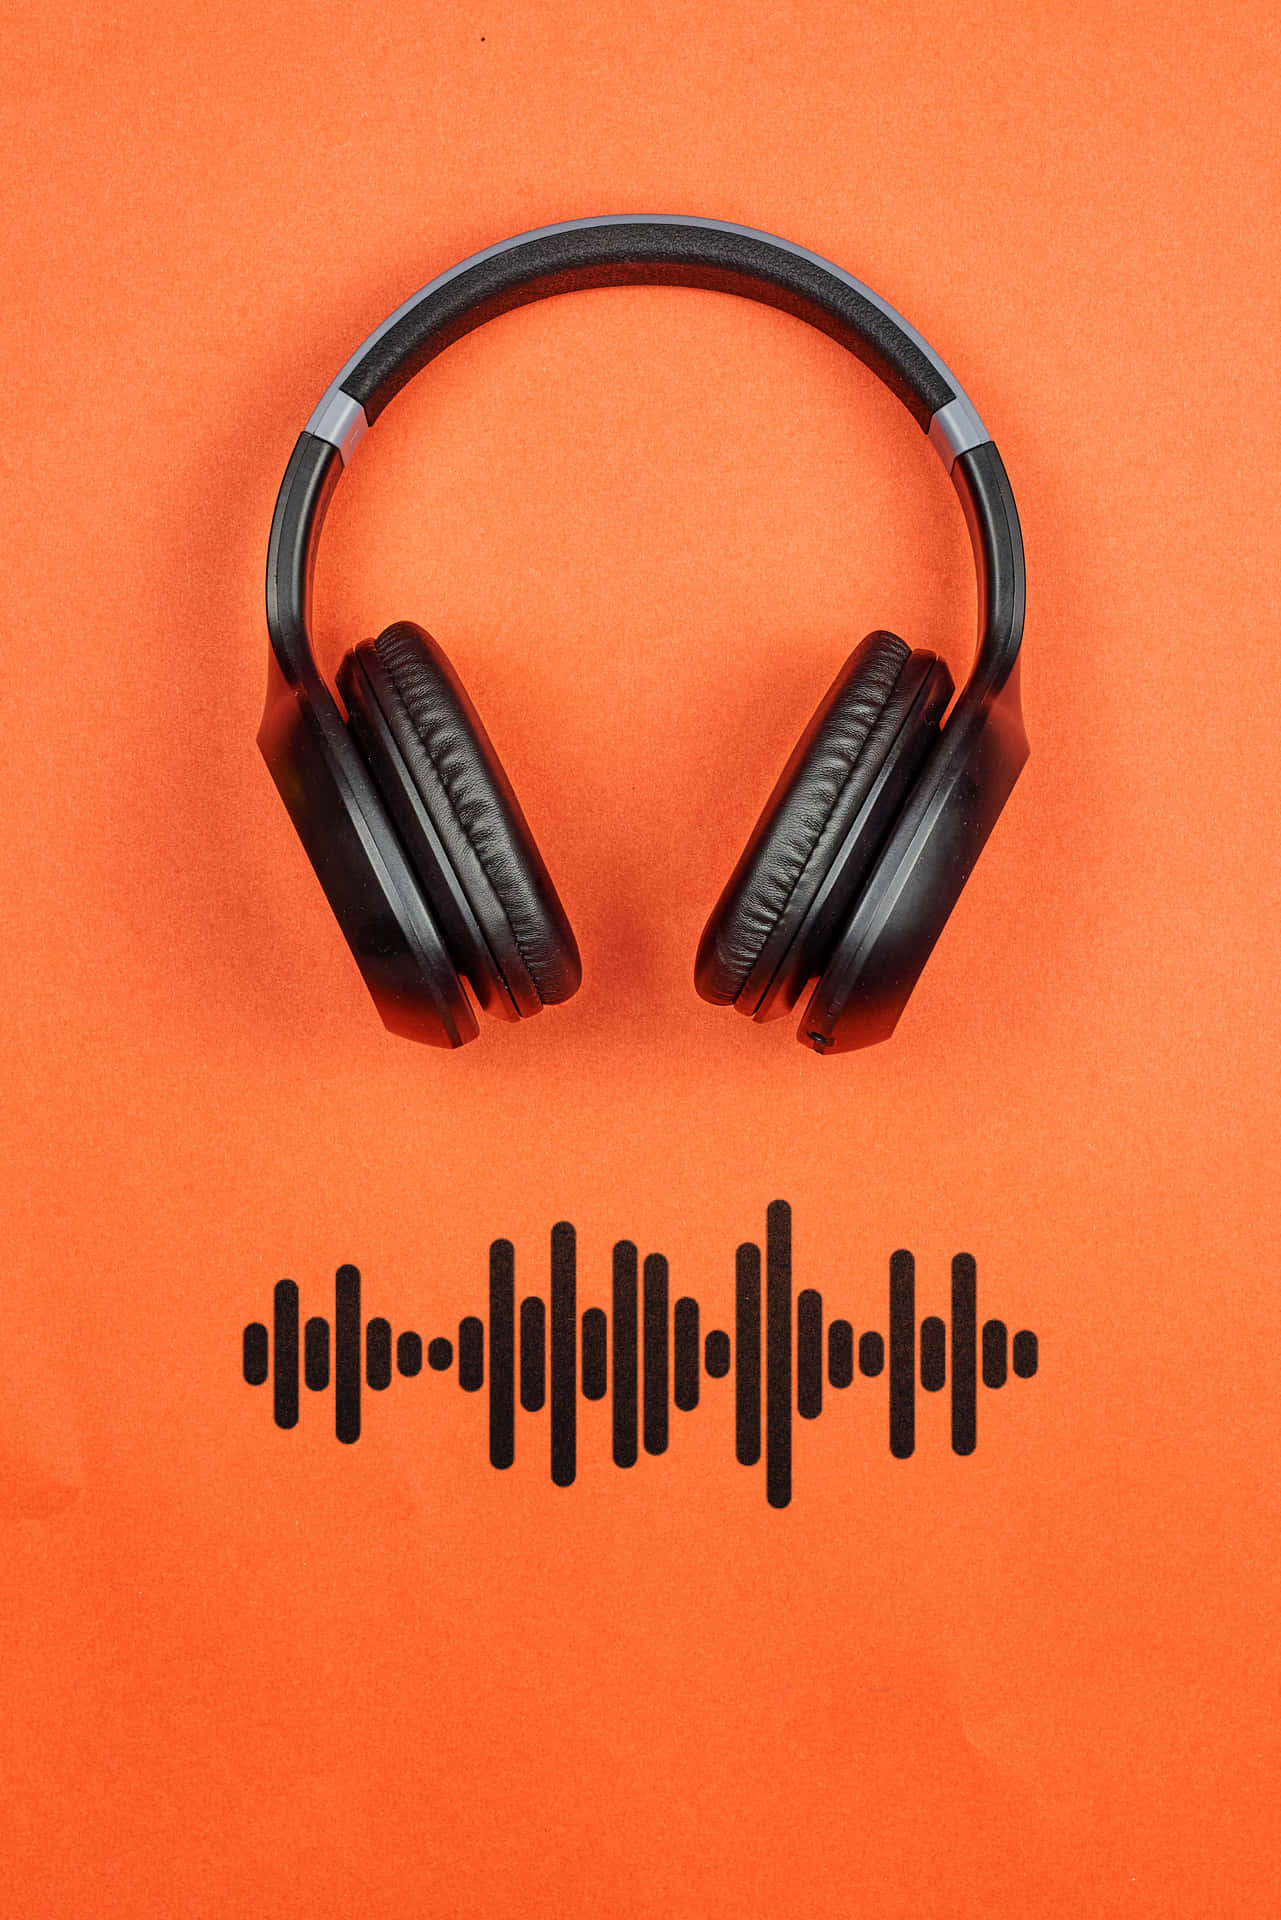 Black Headphones Orange Background Sound Waves Wallpaper